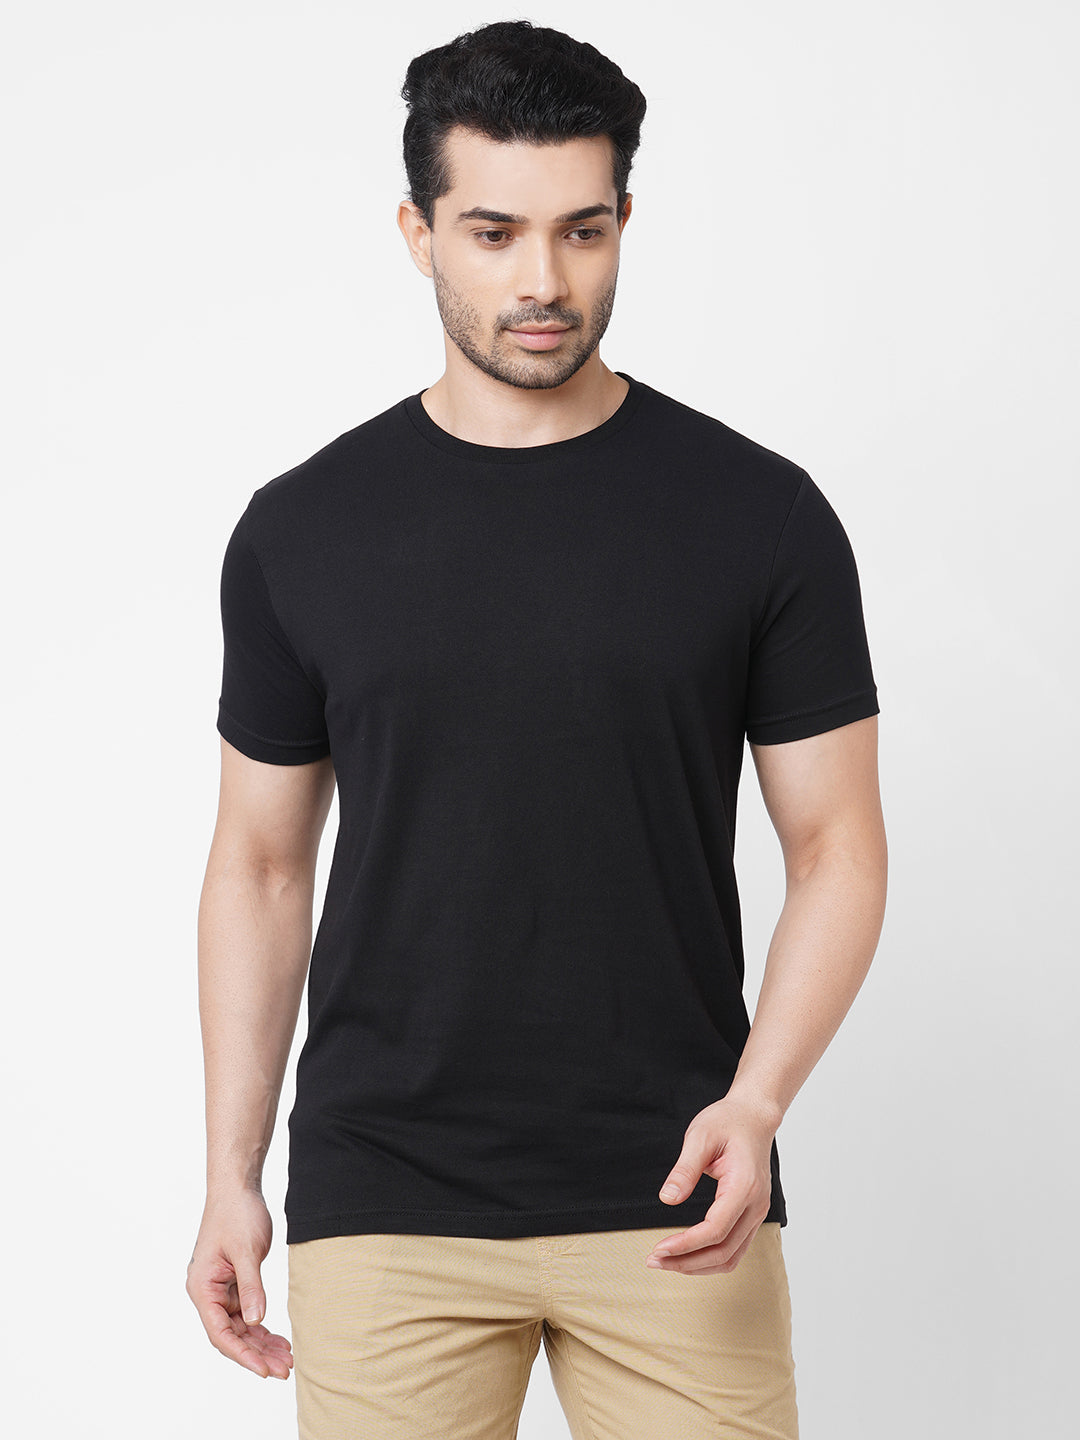 Men's Black 100% Cotton Crew Neck Regular Fit T-Shirt